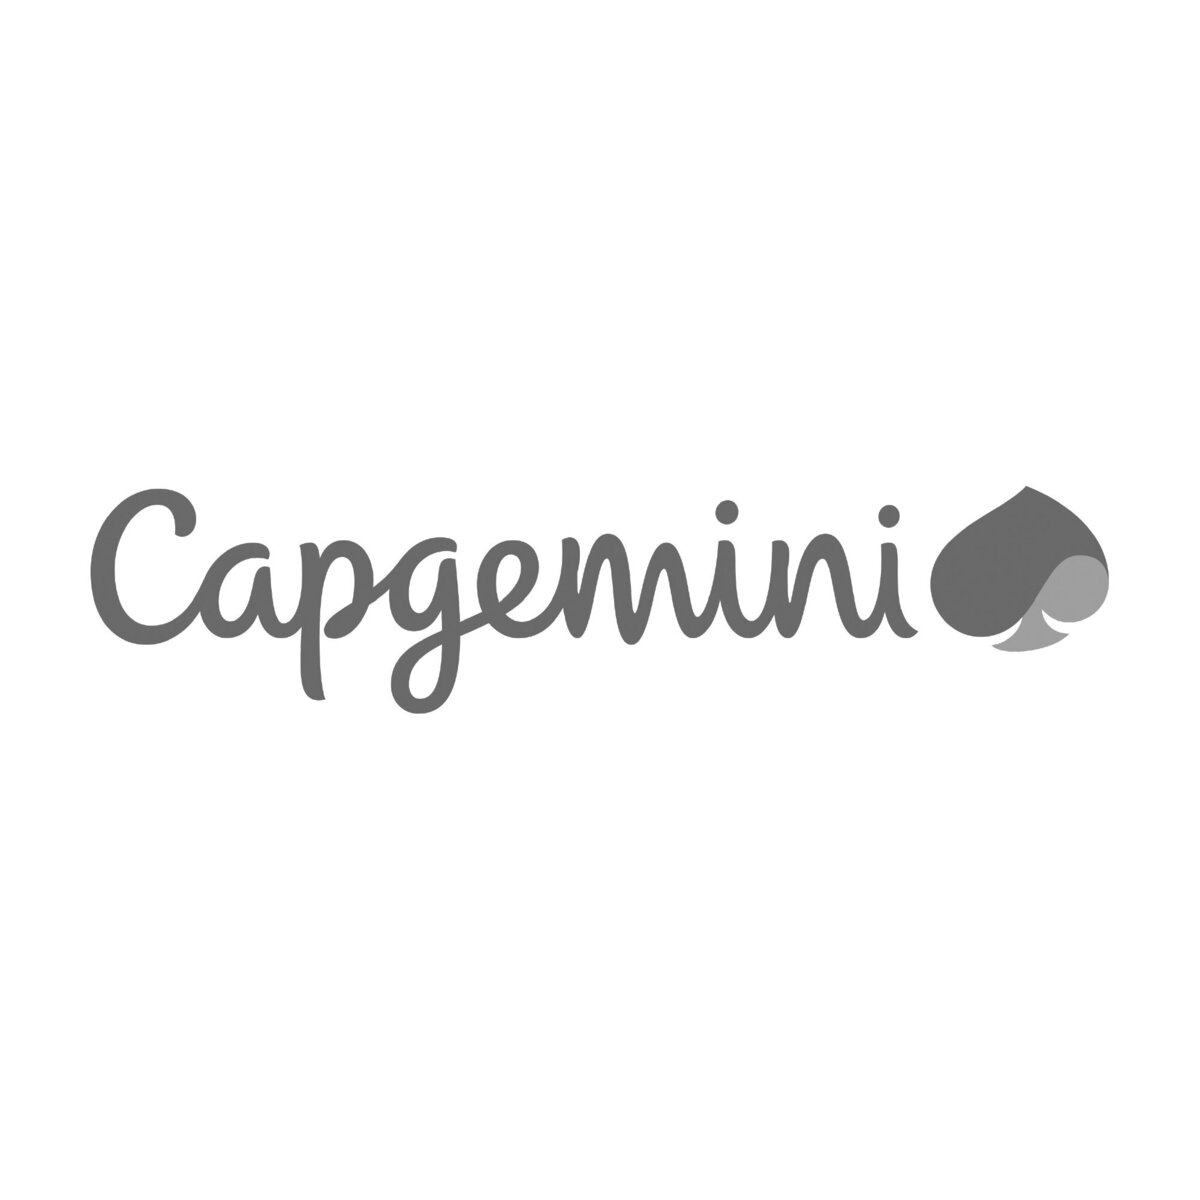 Capgemini b&w